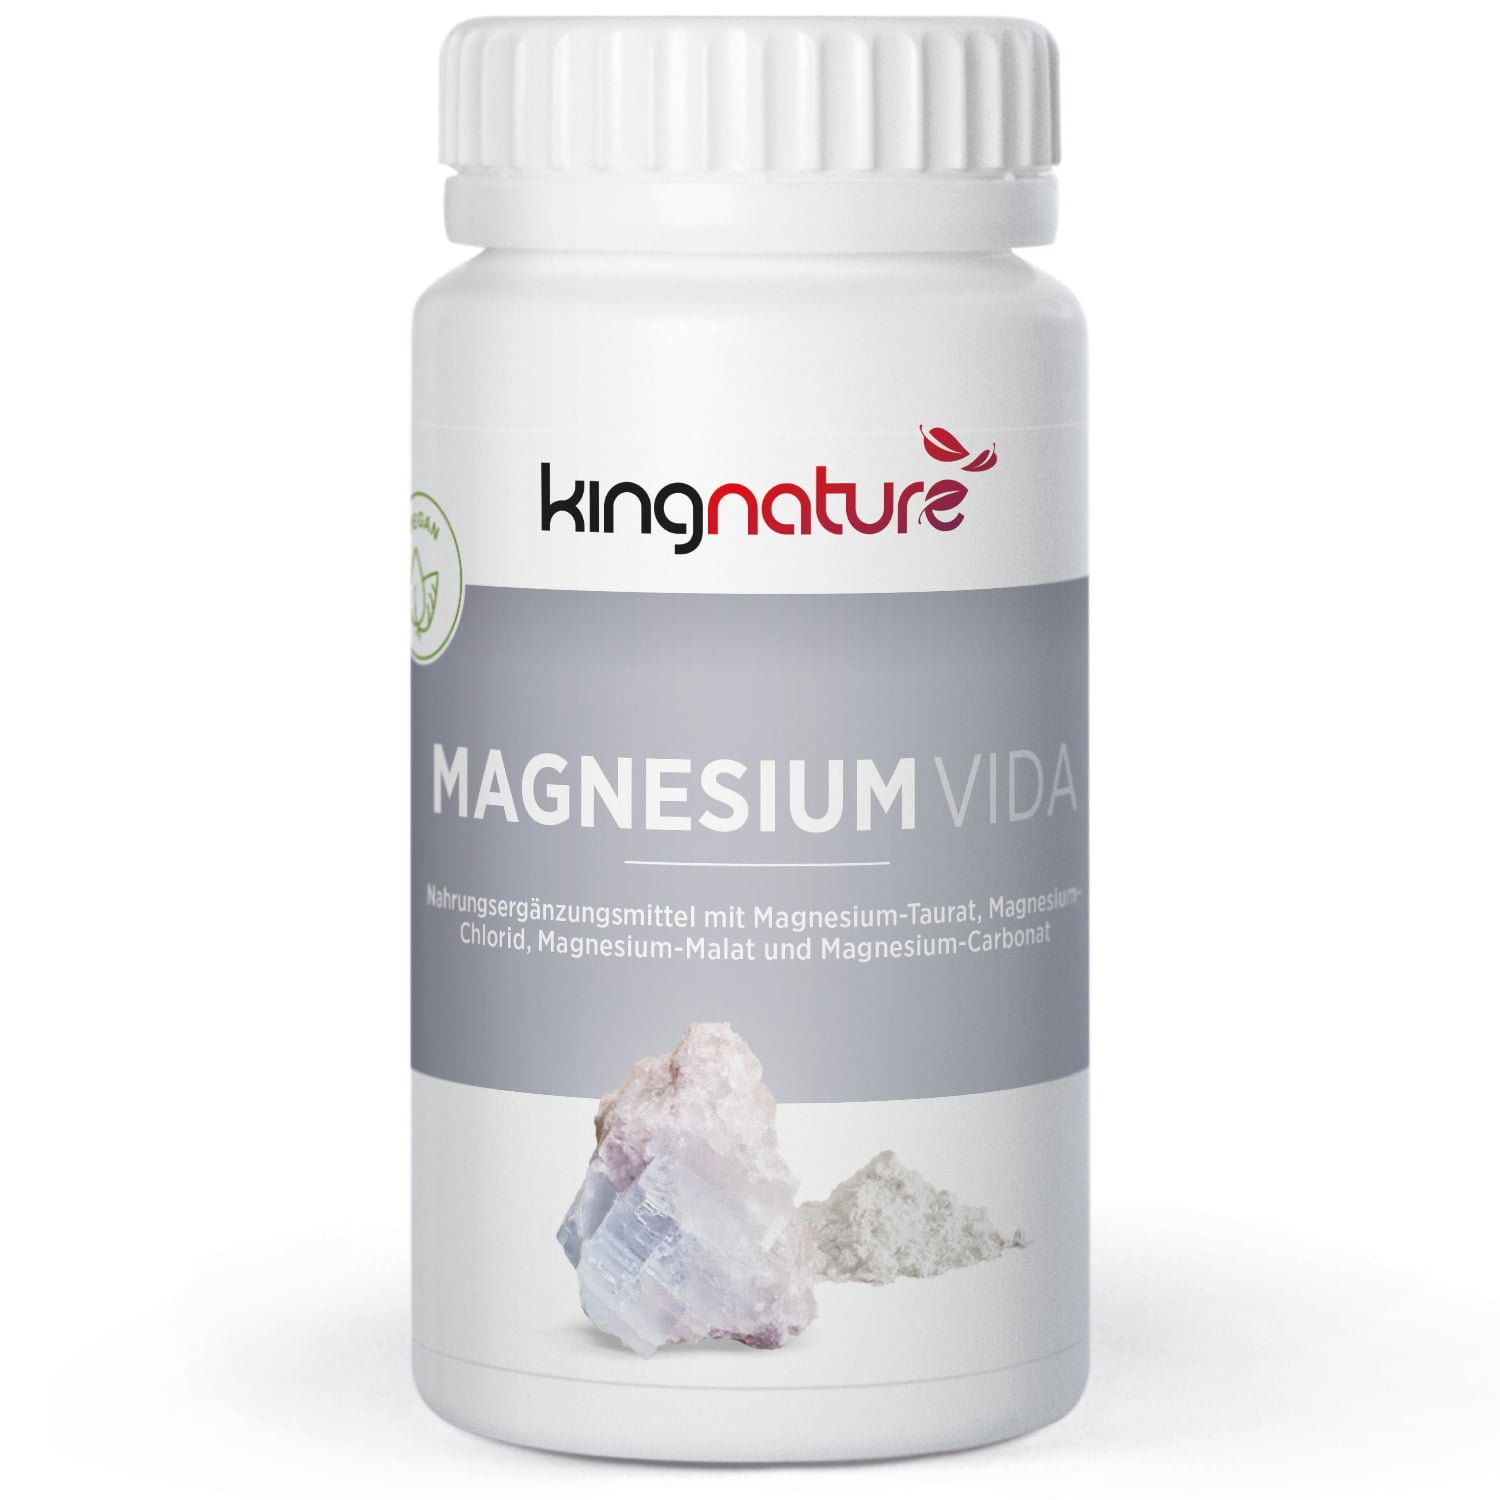 Magnesium Vida - 60 Kapseln - vegan